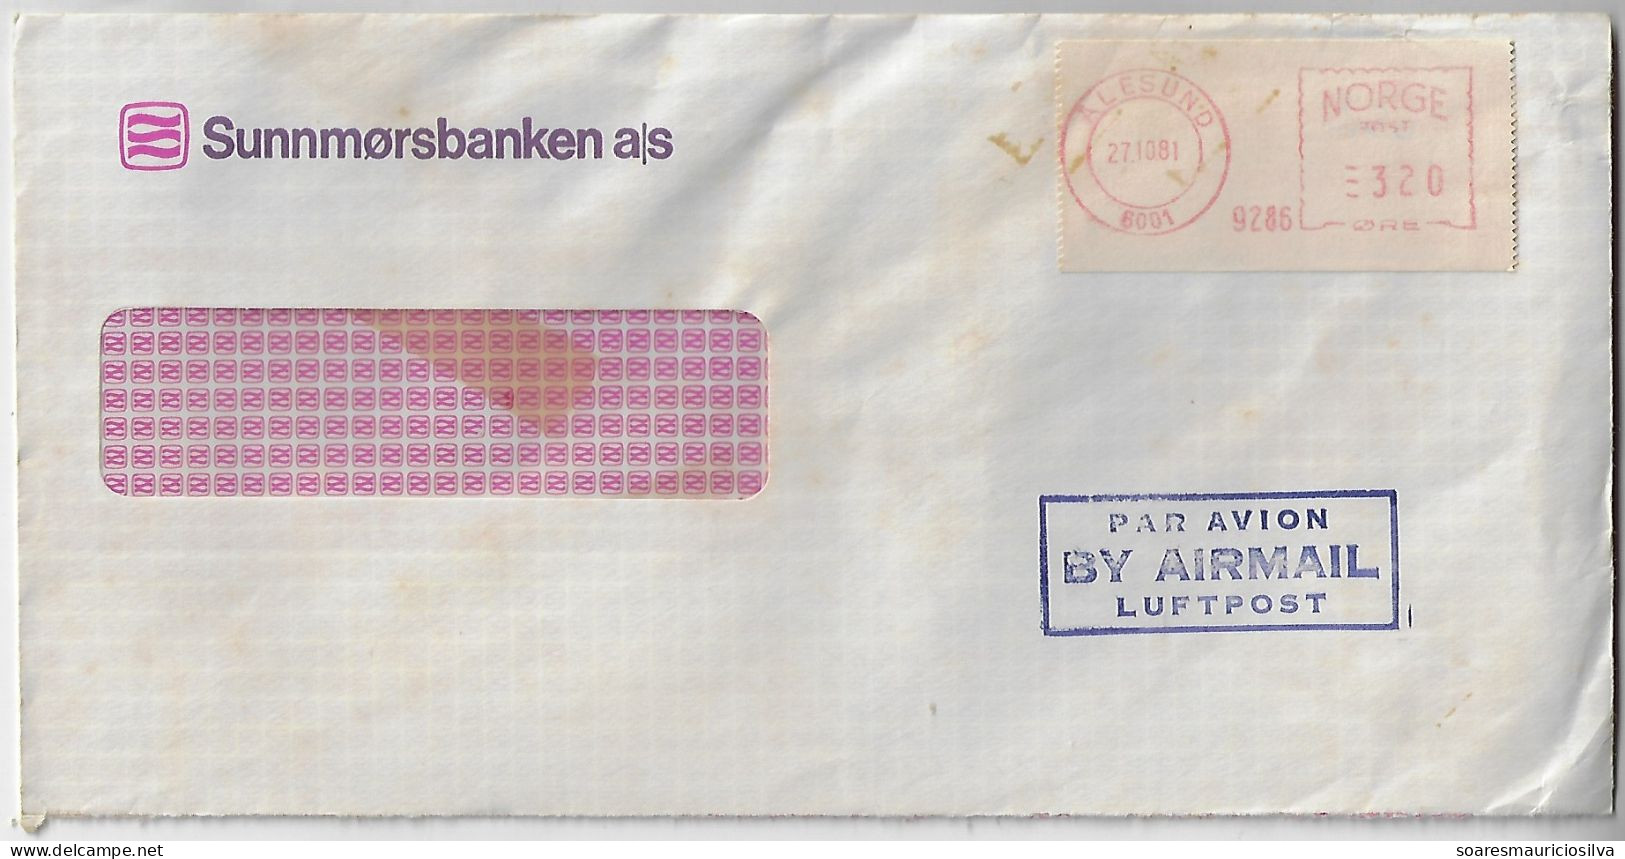 Norway 1981 Sunnmørsbanken airmail Cover Sent From Alesund Meter Stamp Pitney Bowes "5000" - Brieven En Documenten